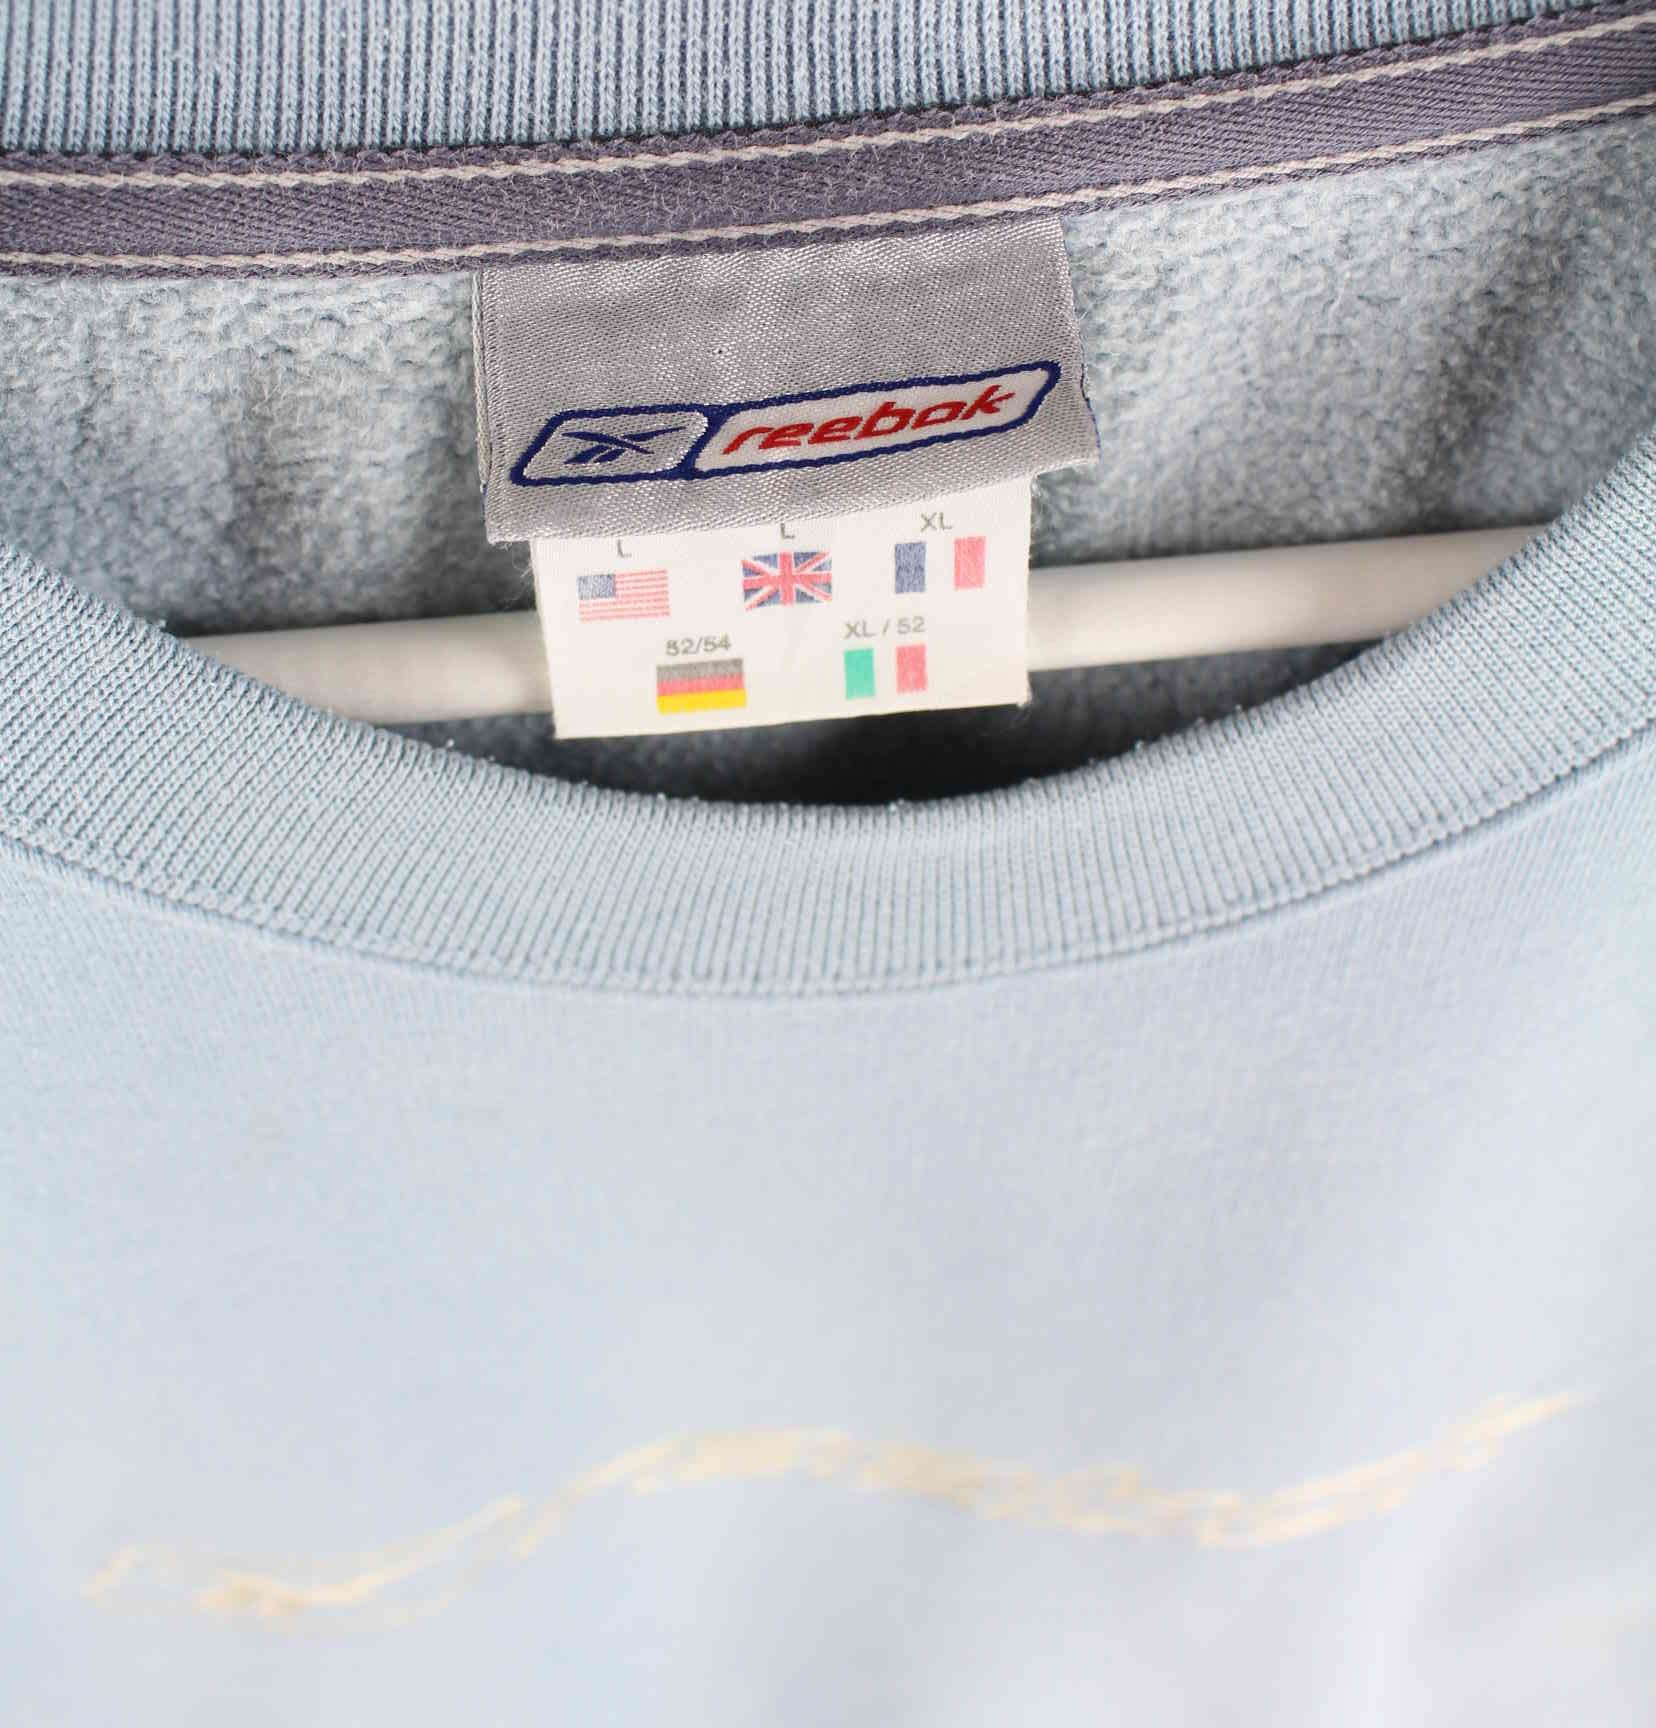 Reebok y2k Embroidered Sweater Blau L (detail image 2)